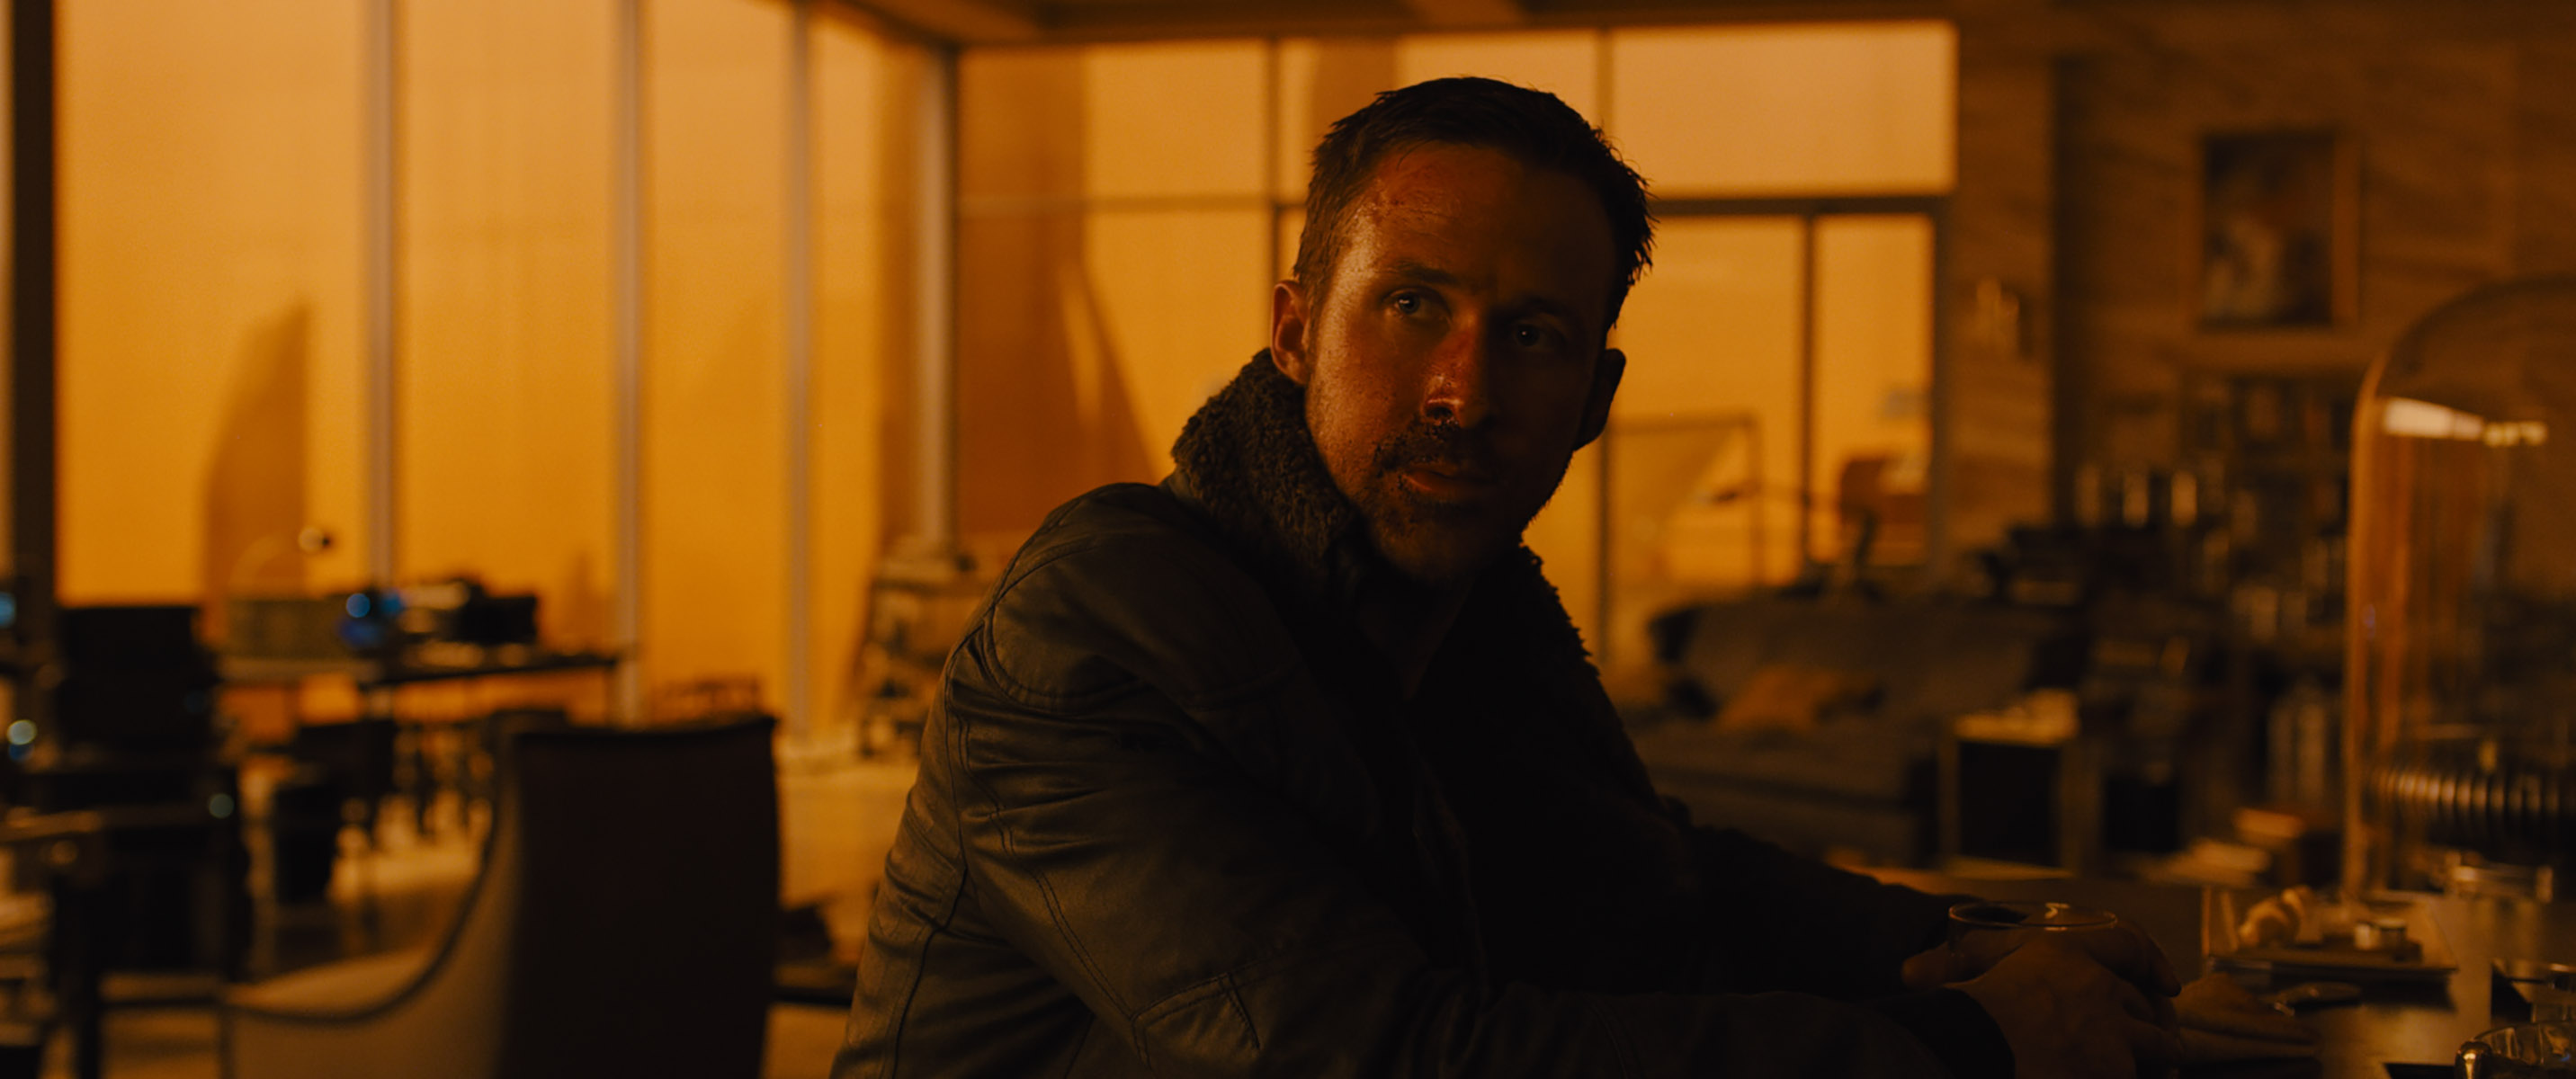 Blade Runner 2049 (2017, USA, d. Denis Villeneuve, 163 minutes)